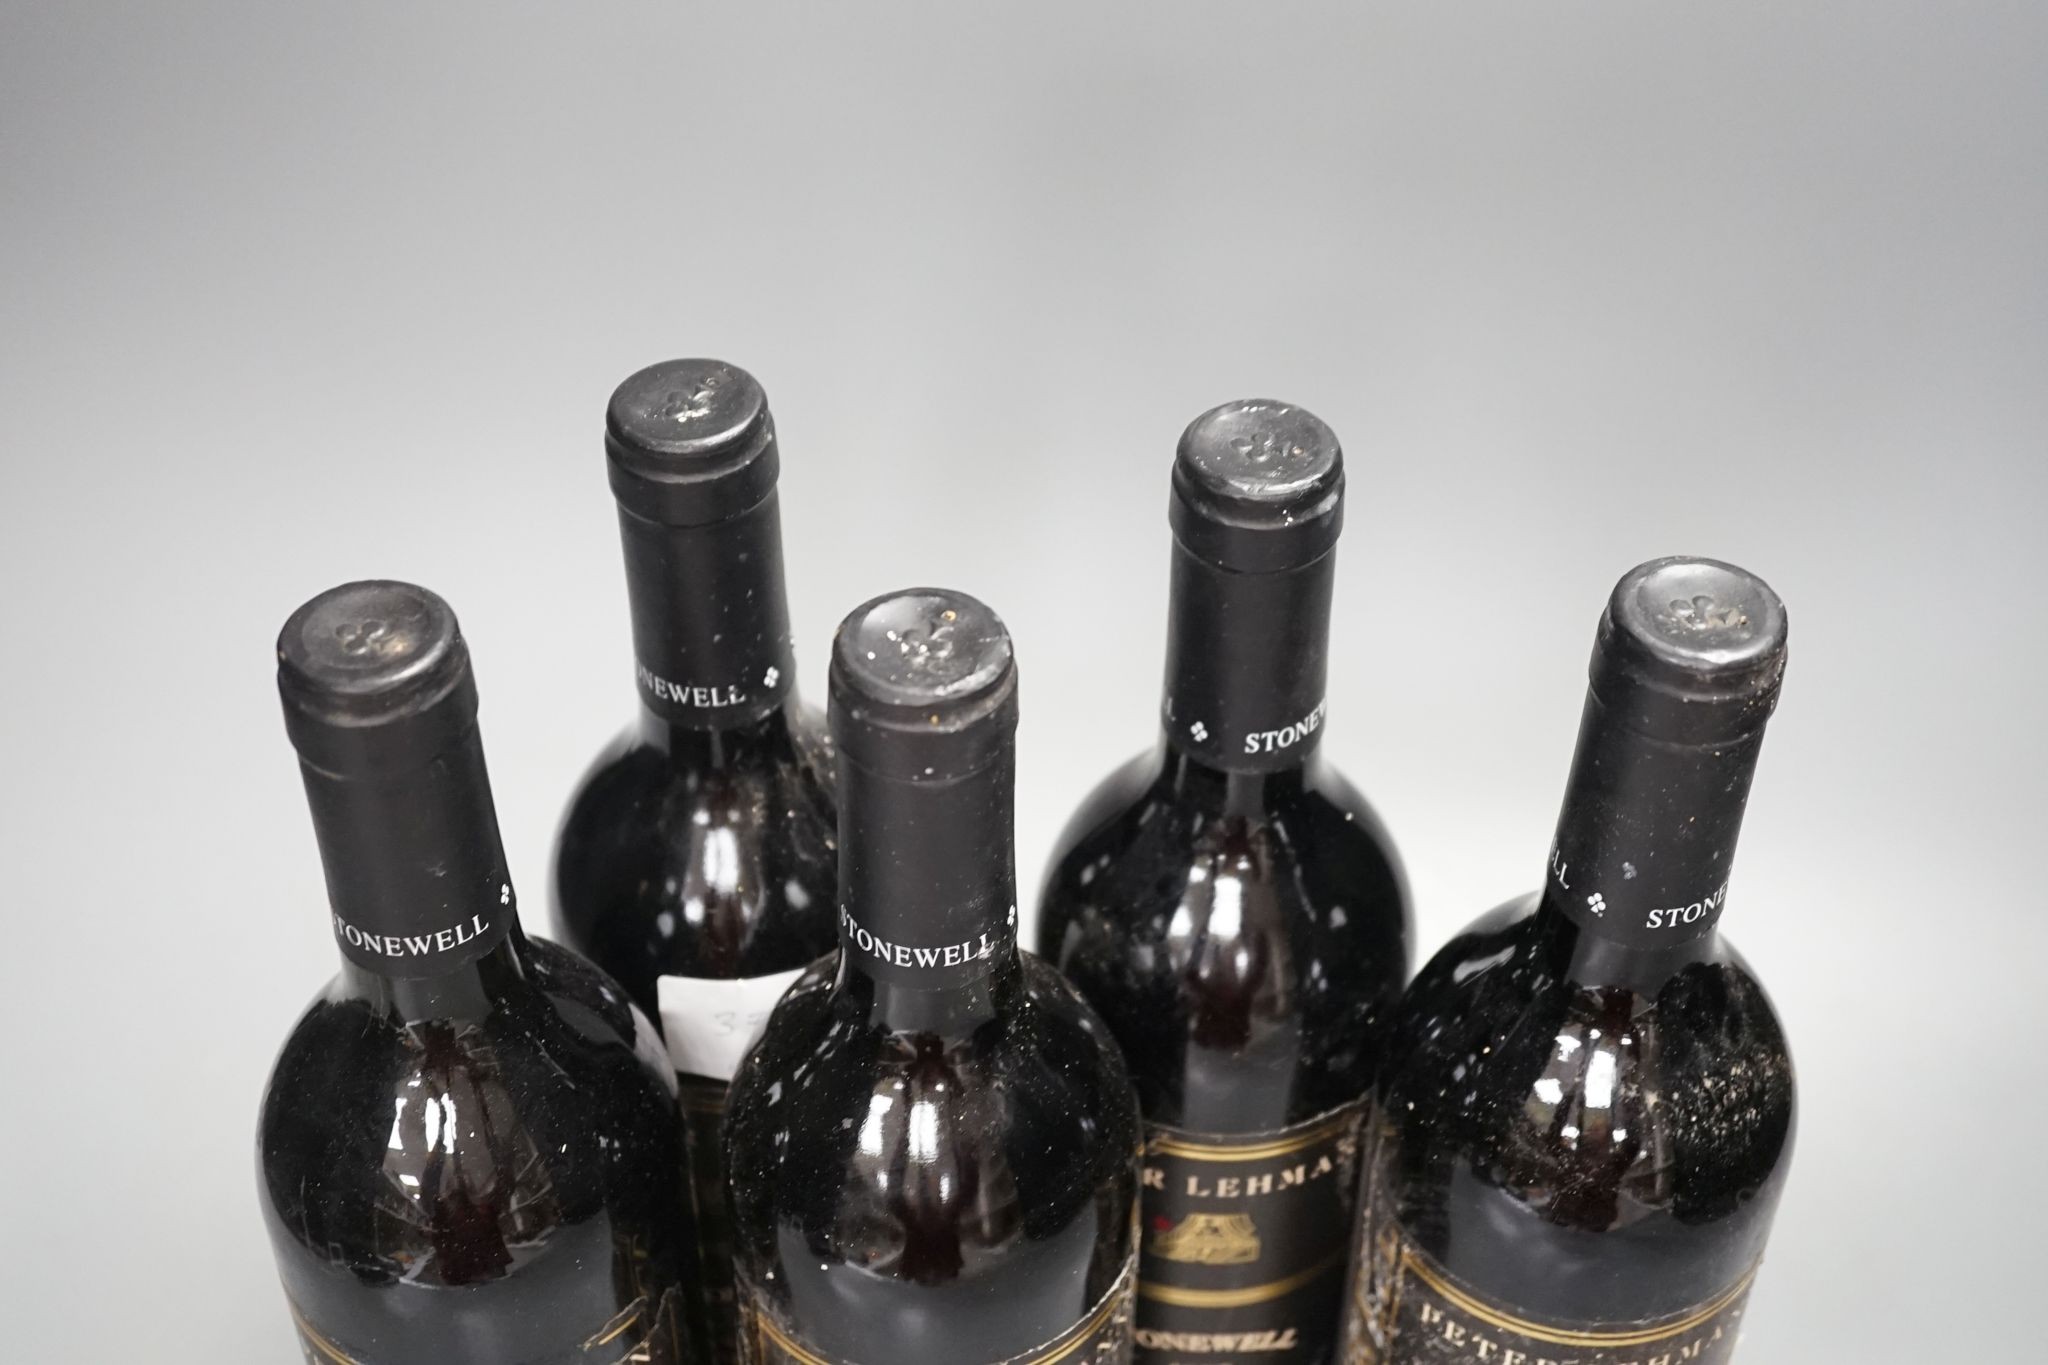 Five bottles of Peter Lehrmann Stonewell 1993 Shiraz